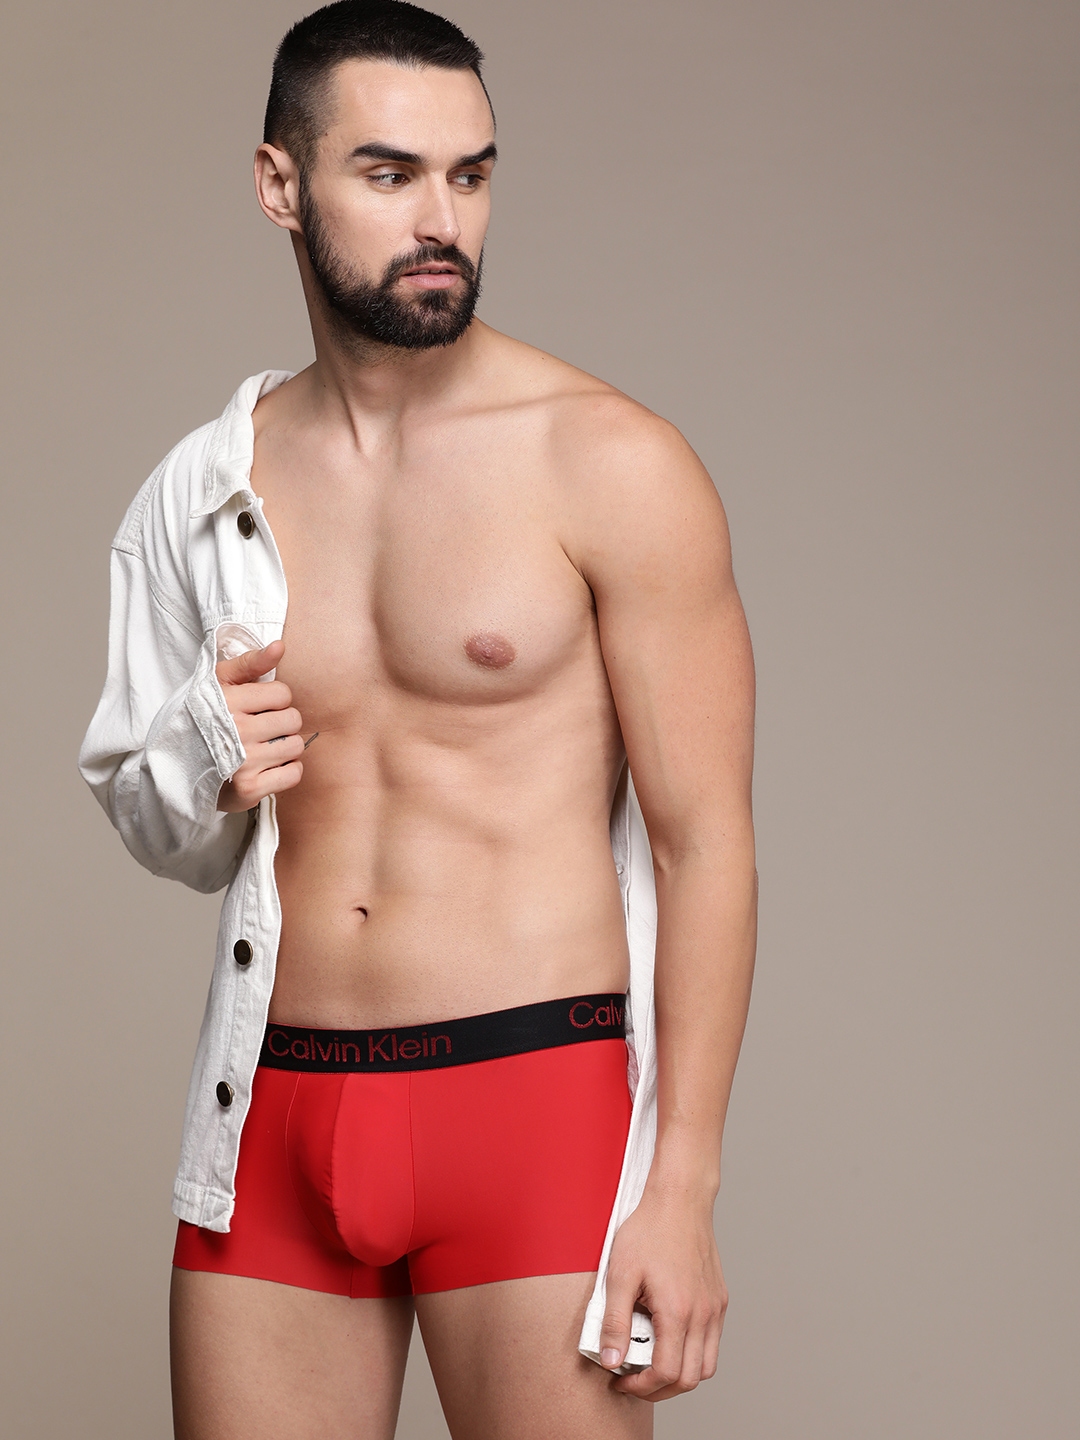 Buy FREECULTR Men's Underwear Anti Bacterial Micromodal Airsoft